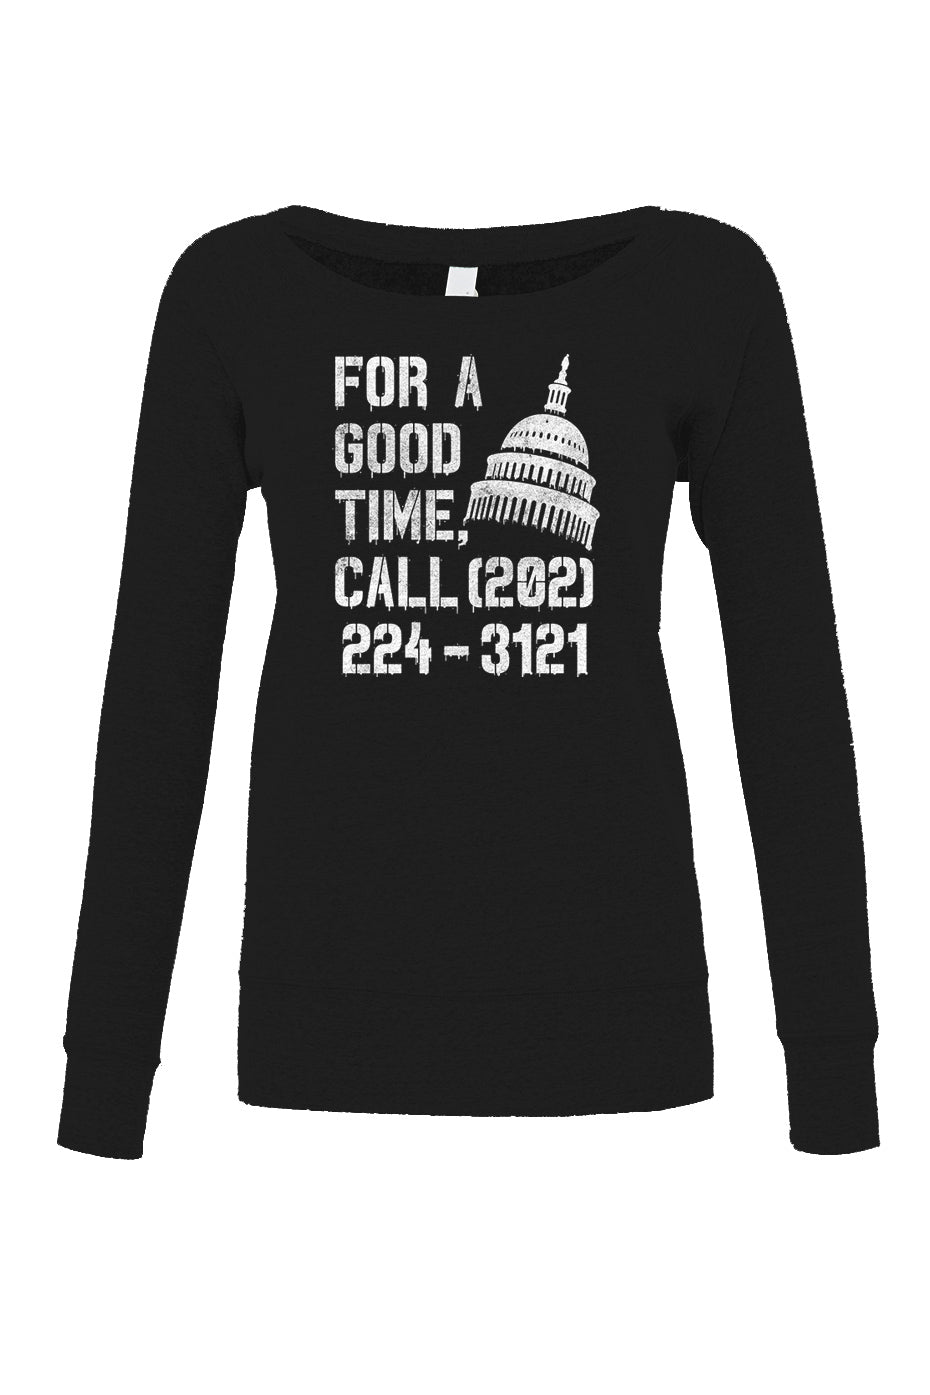 Women's For a Good Time Call Congress Scoop Neck Fleece - Activist Shirt